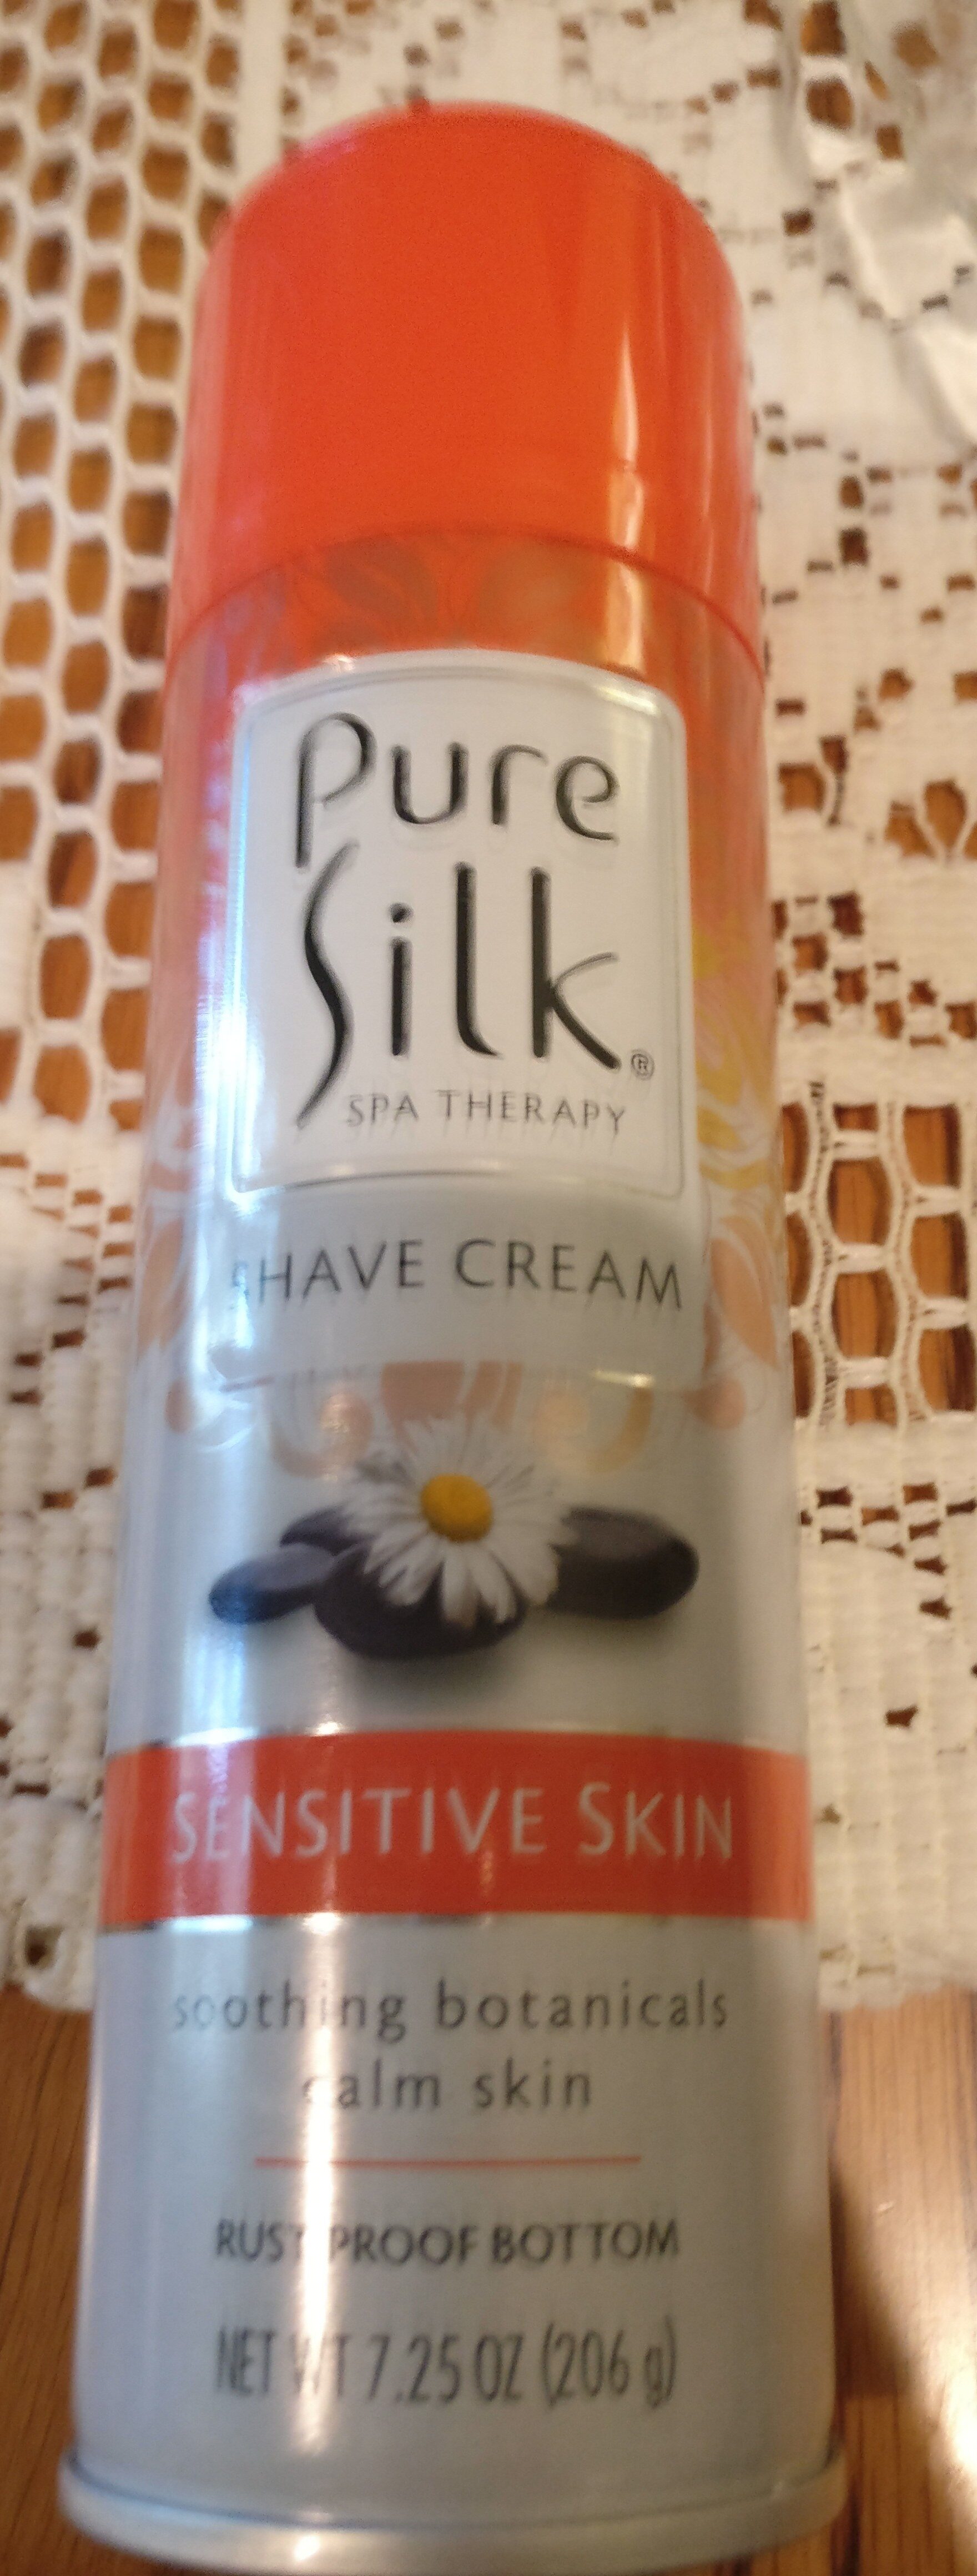 purw silk sensitive skin - Product